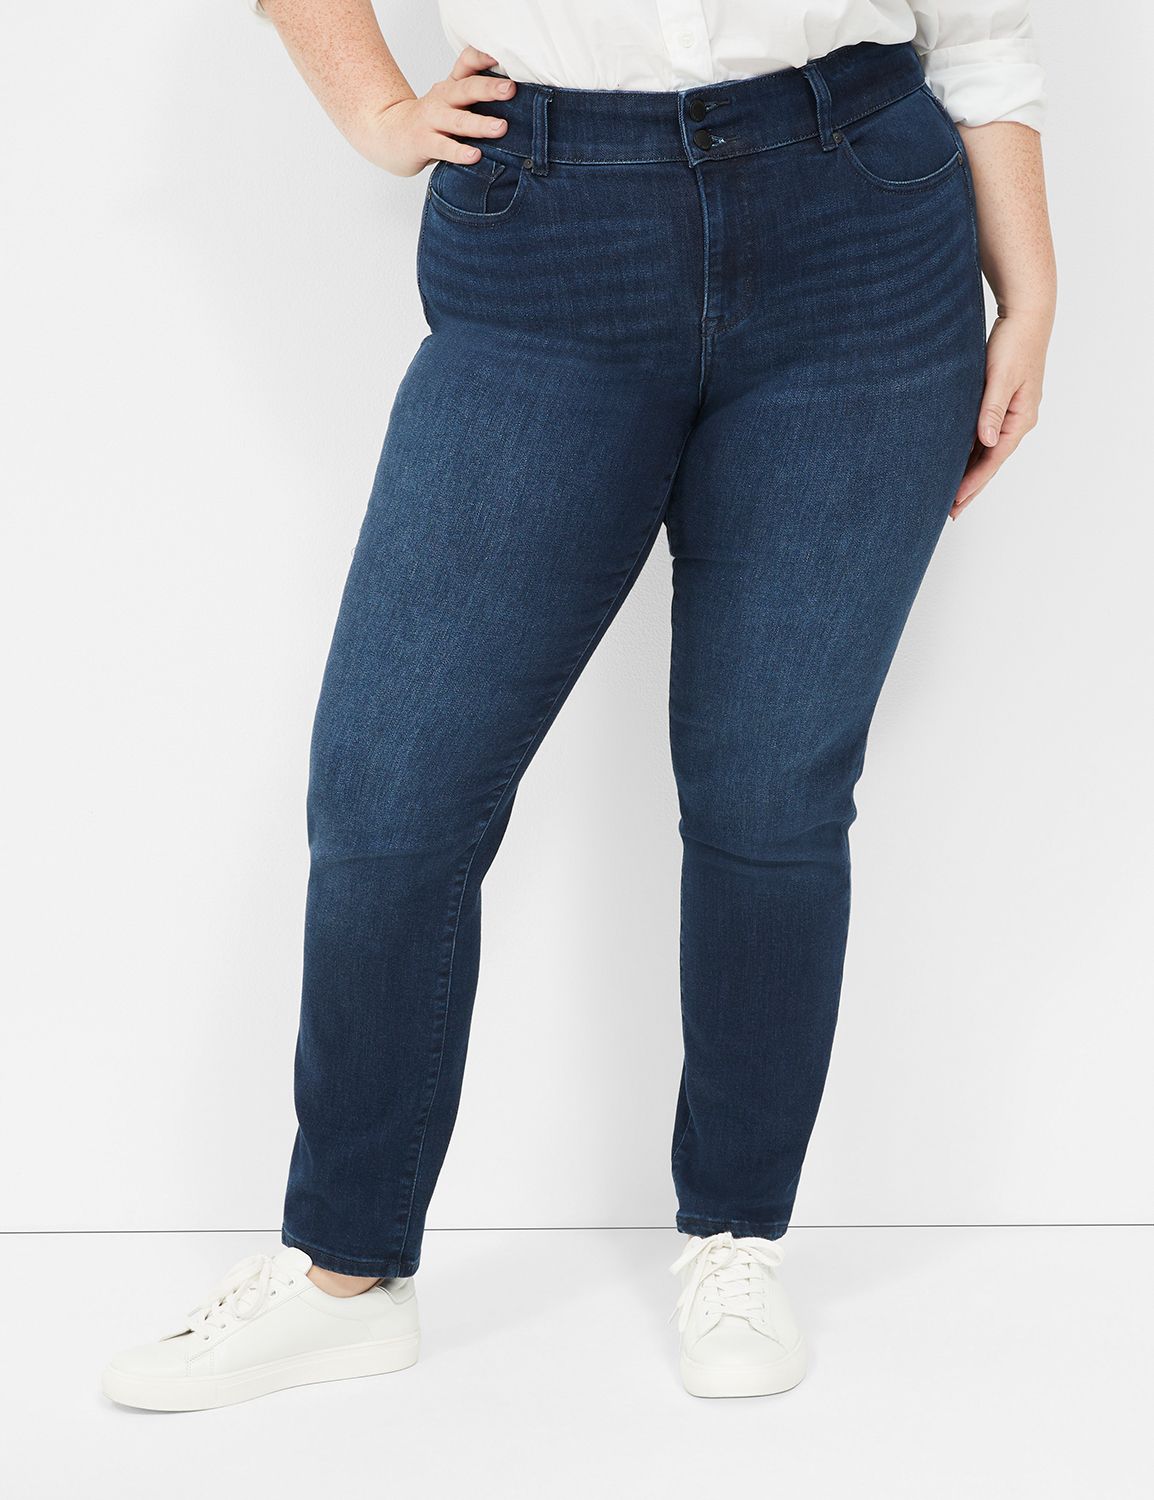 lane bryant tummy control jeans